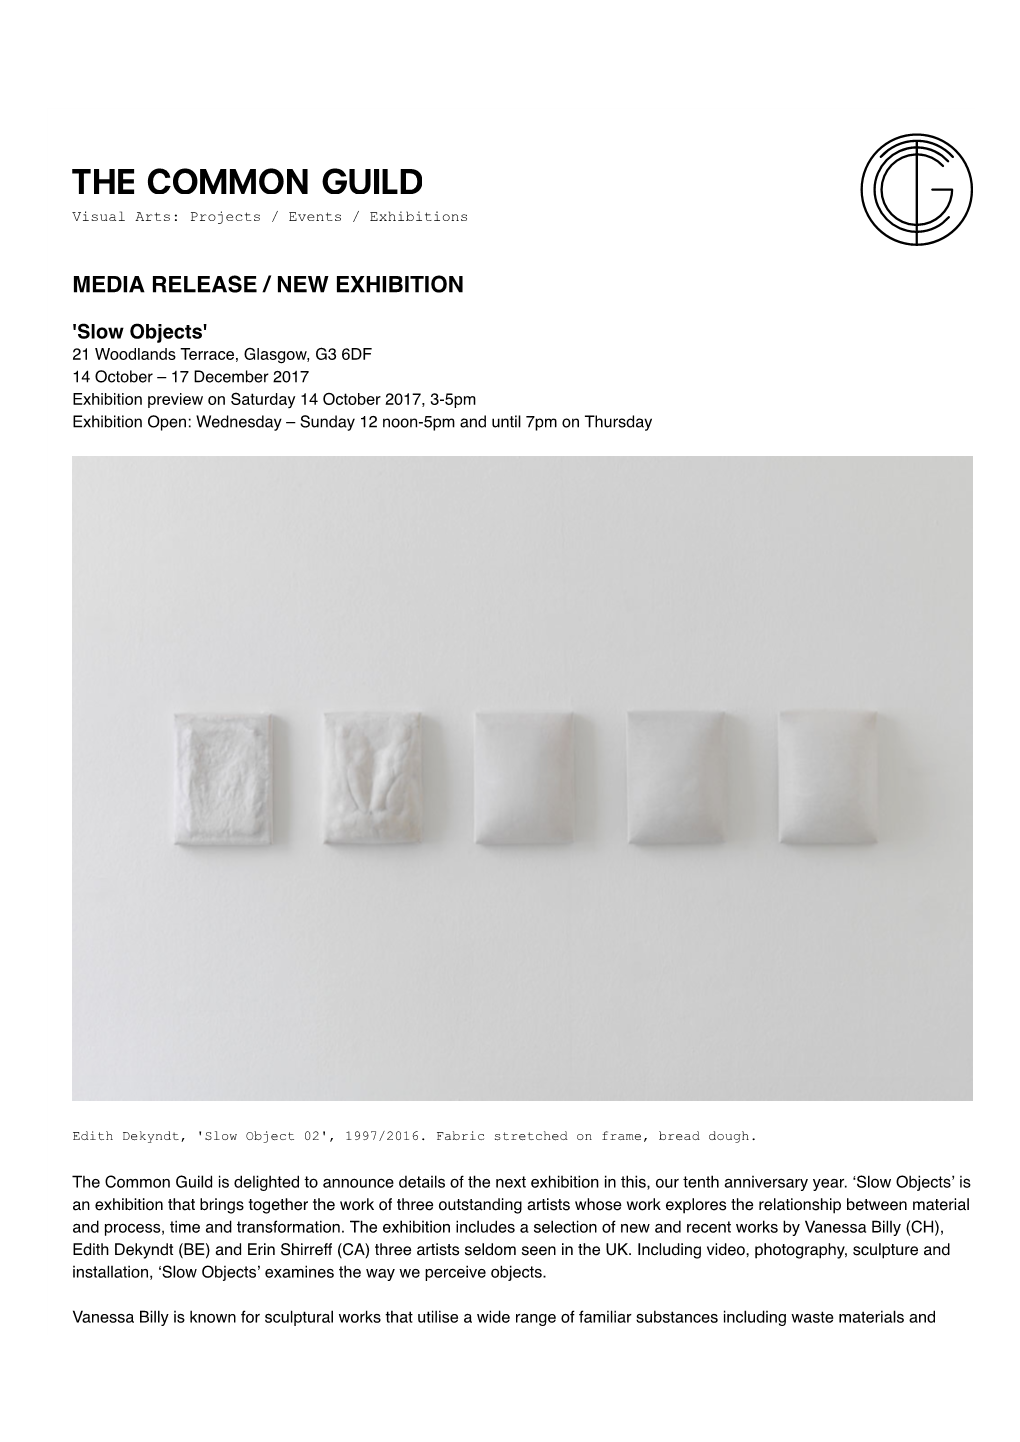 Media Release / New Exhibition